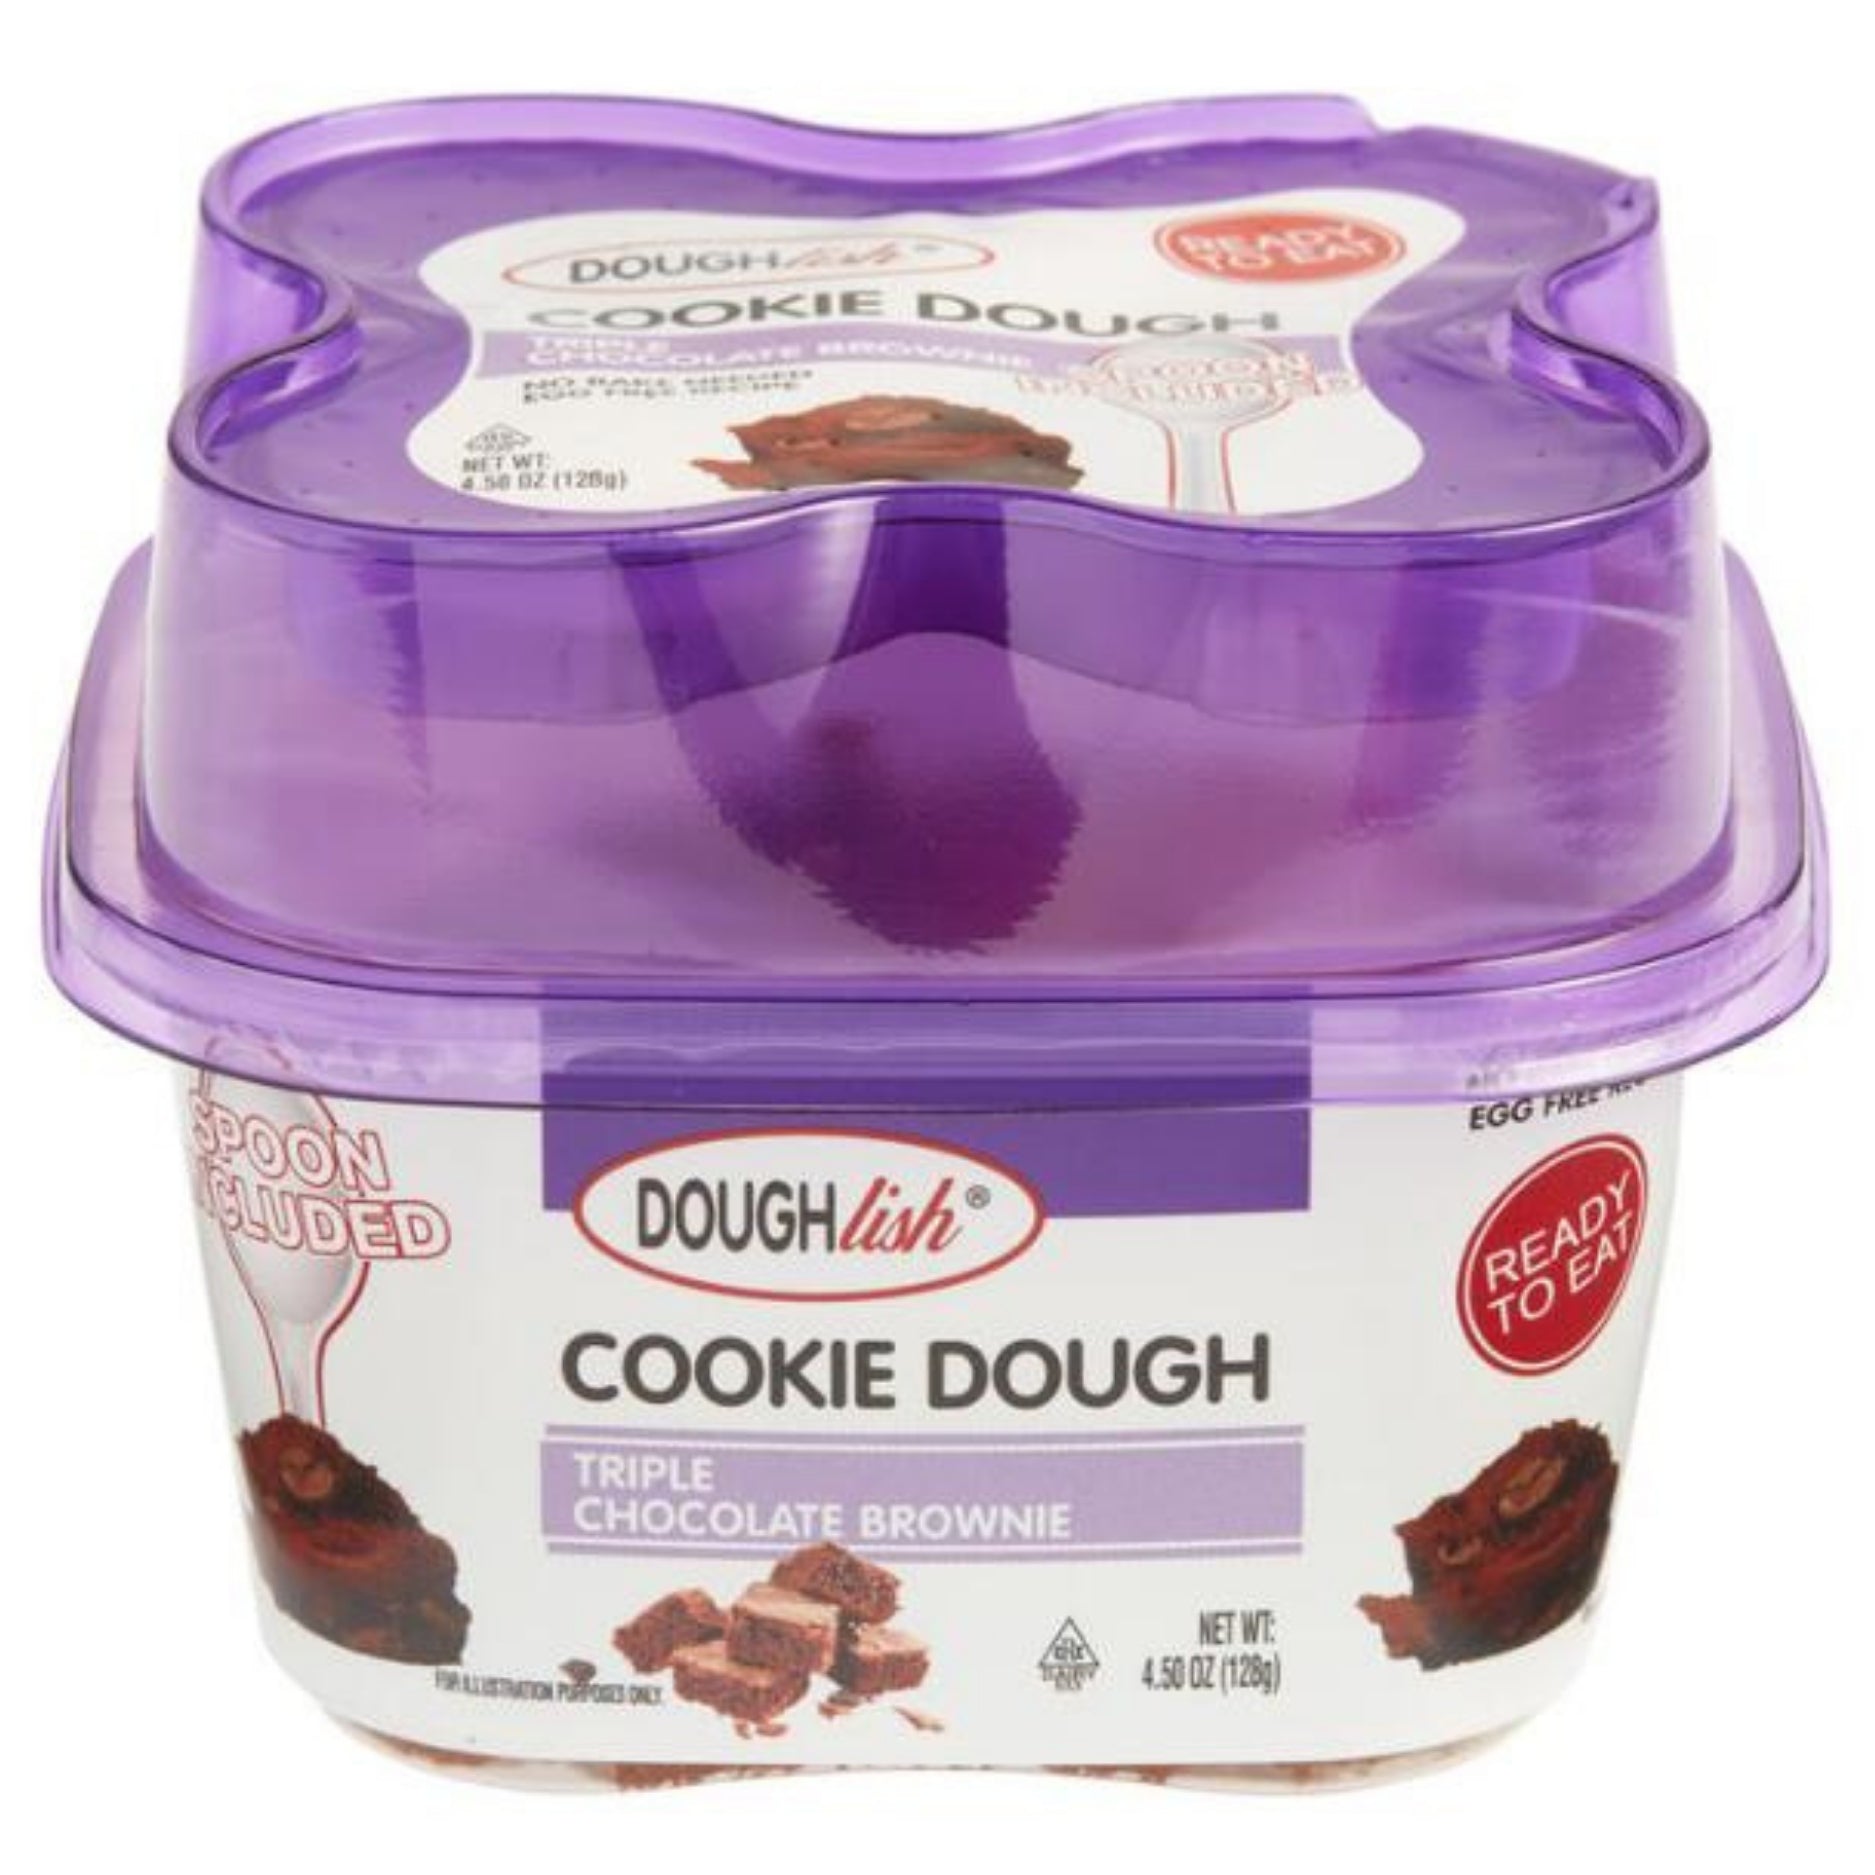 DOUGHlish Triple Chocolate Brownie Cookie Dough - 4.5oz